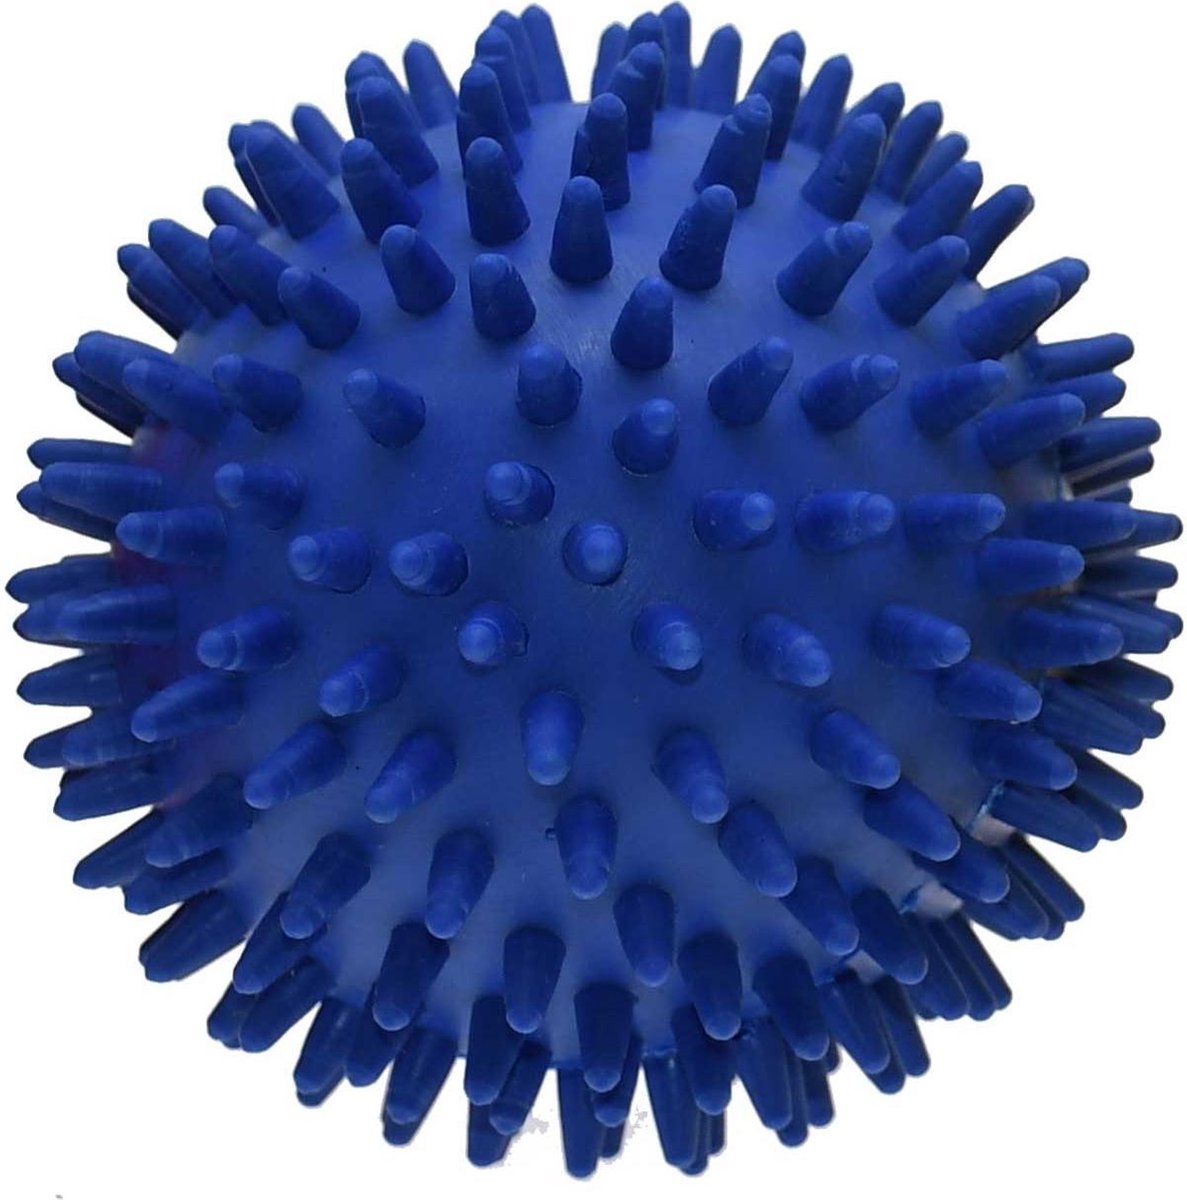 Reydon Spikeball Soft-touch 10 Cm Vinyl Blauw